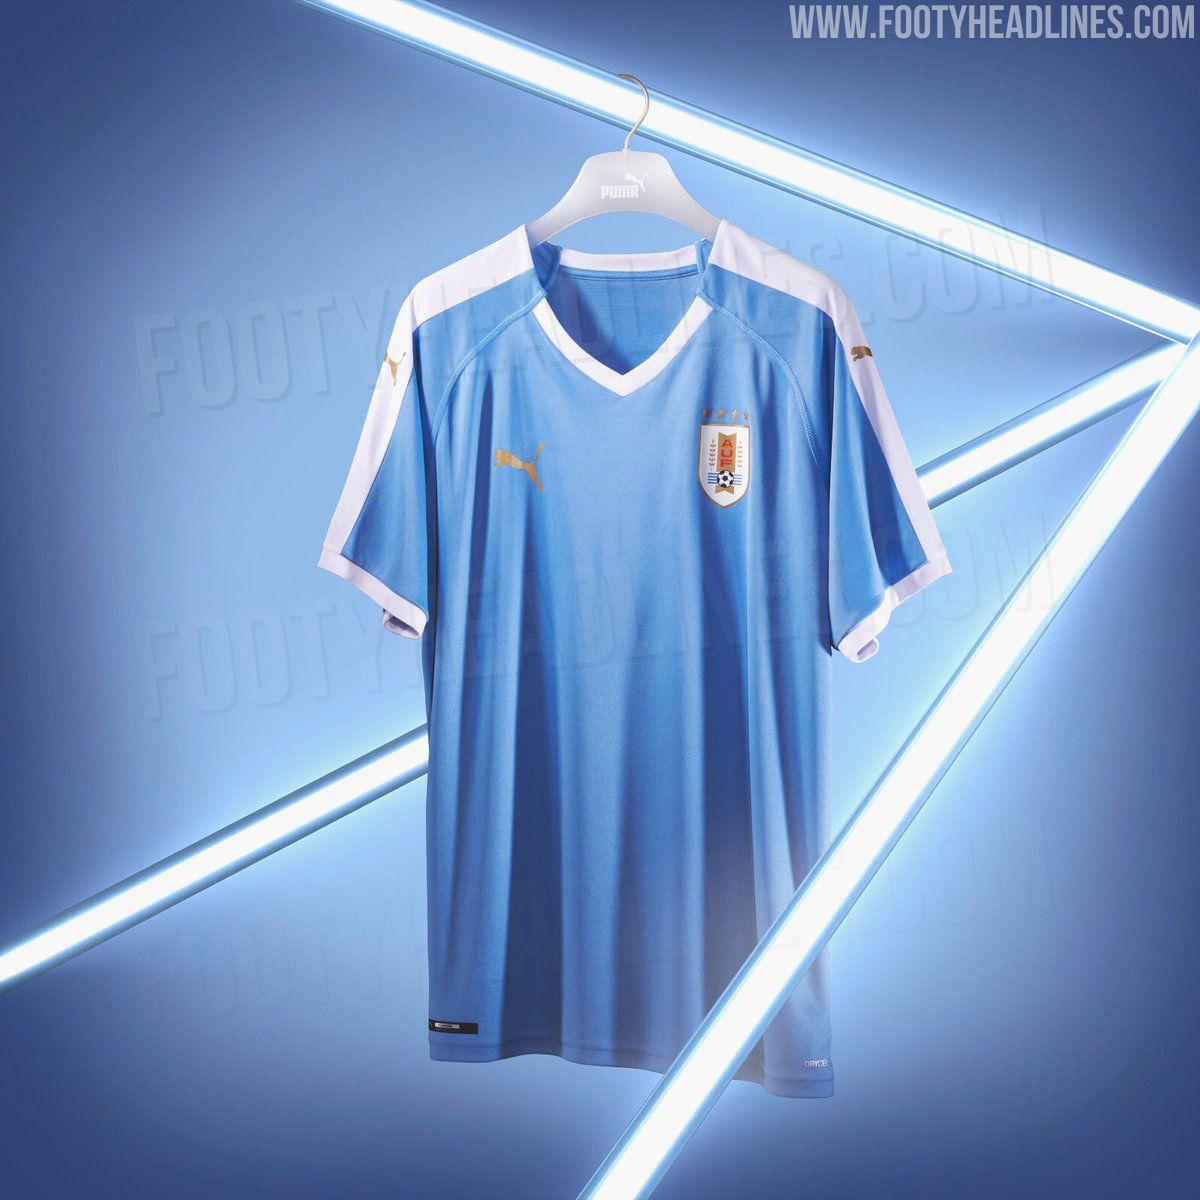 uruguay-2019-copa-america-home-away-kits-2.jpg